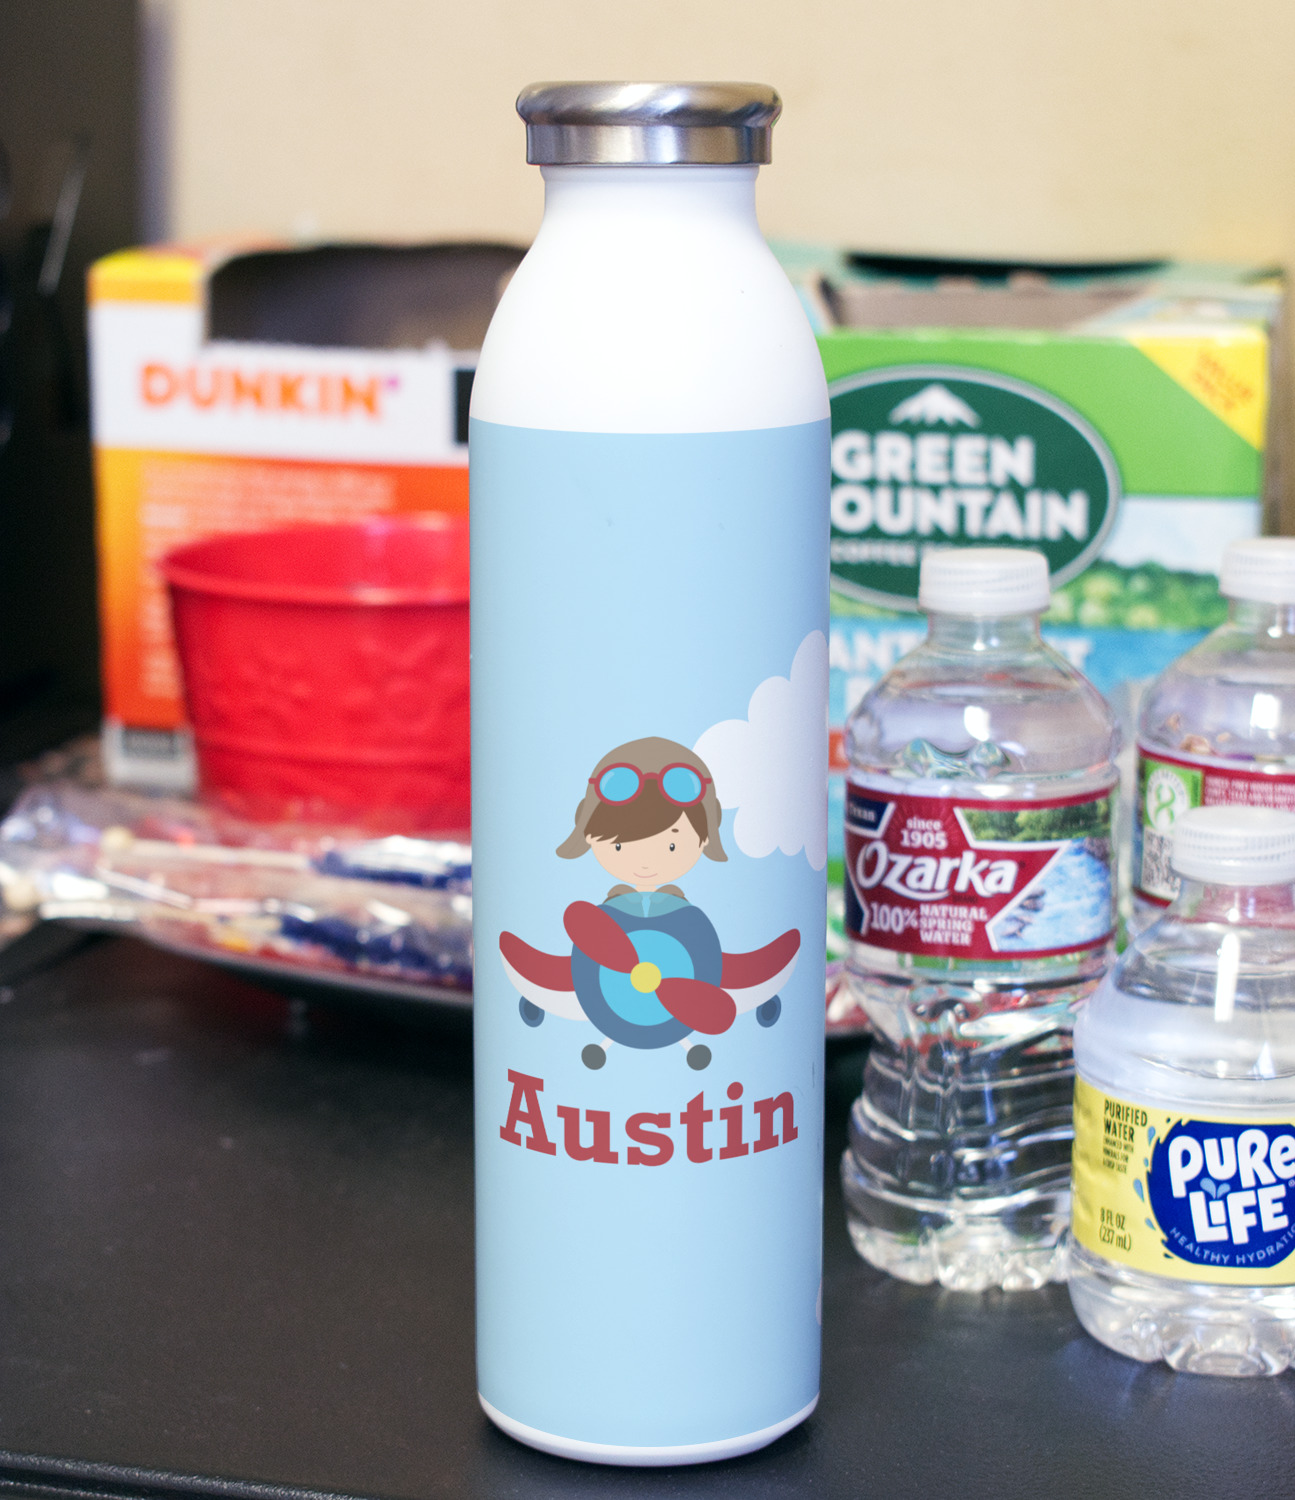 Custom Airplane & Pilot Water Bottles - 20 oz - Aluminum